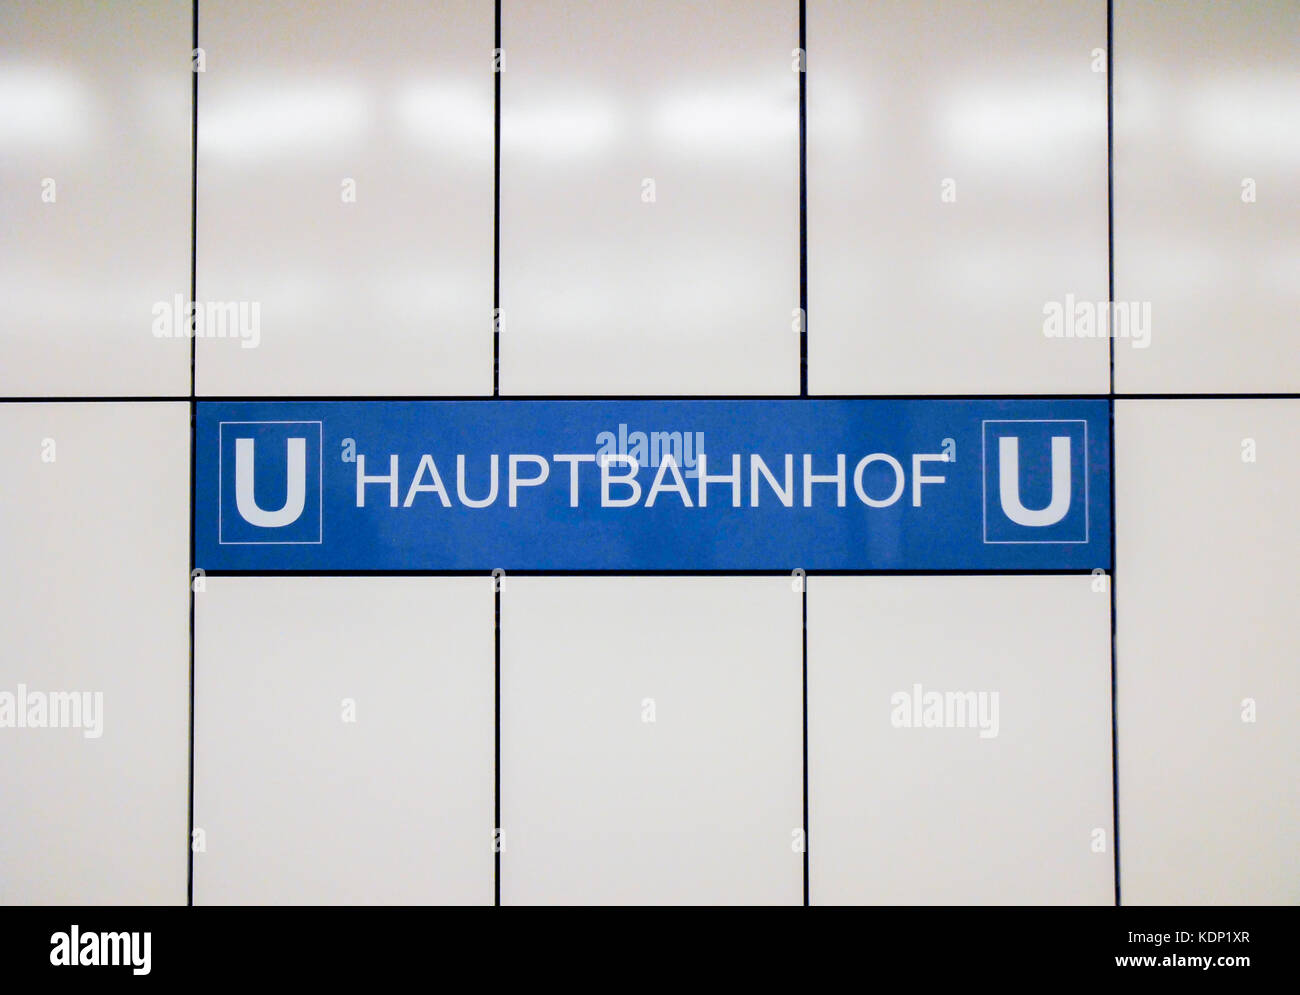 Hauptbahnhof subway station name plate in Berlin,Germany. Stock Photo